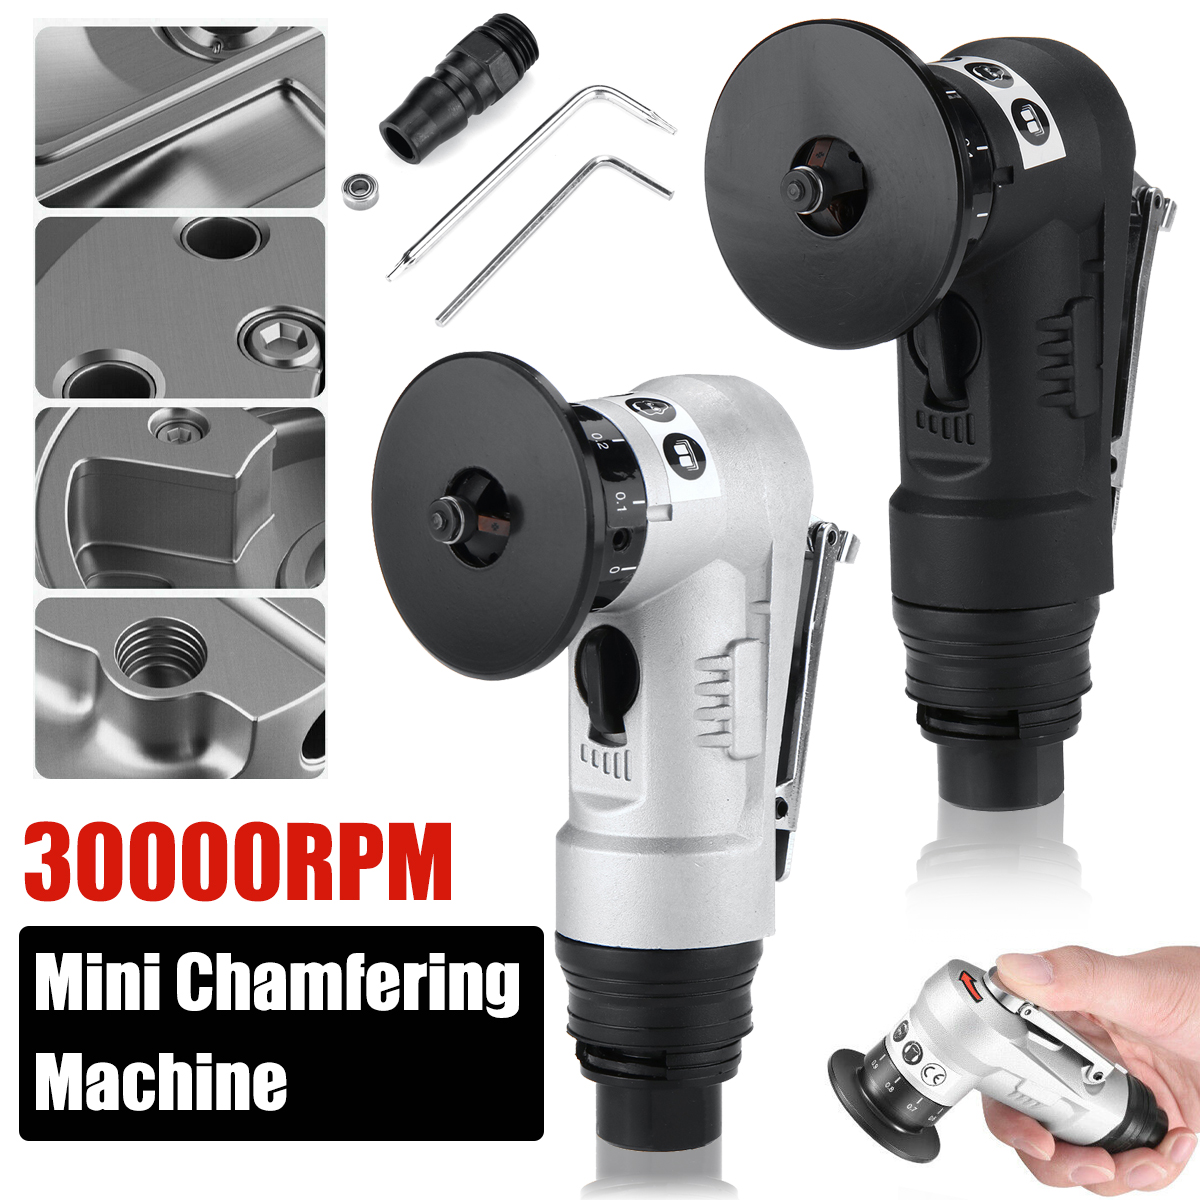 Mini-Pneumatic-Chamfering-Machine-30000RPM-Handheld-Metal-Burr-Trimming-Air-Tool-1879787-2